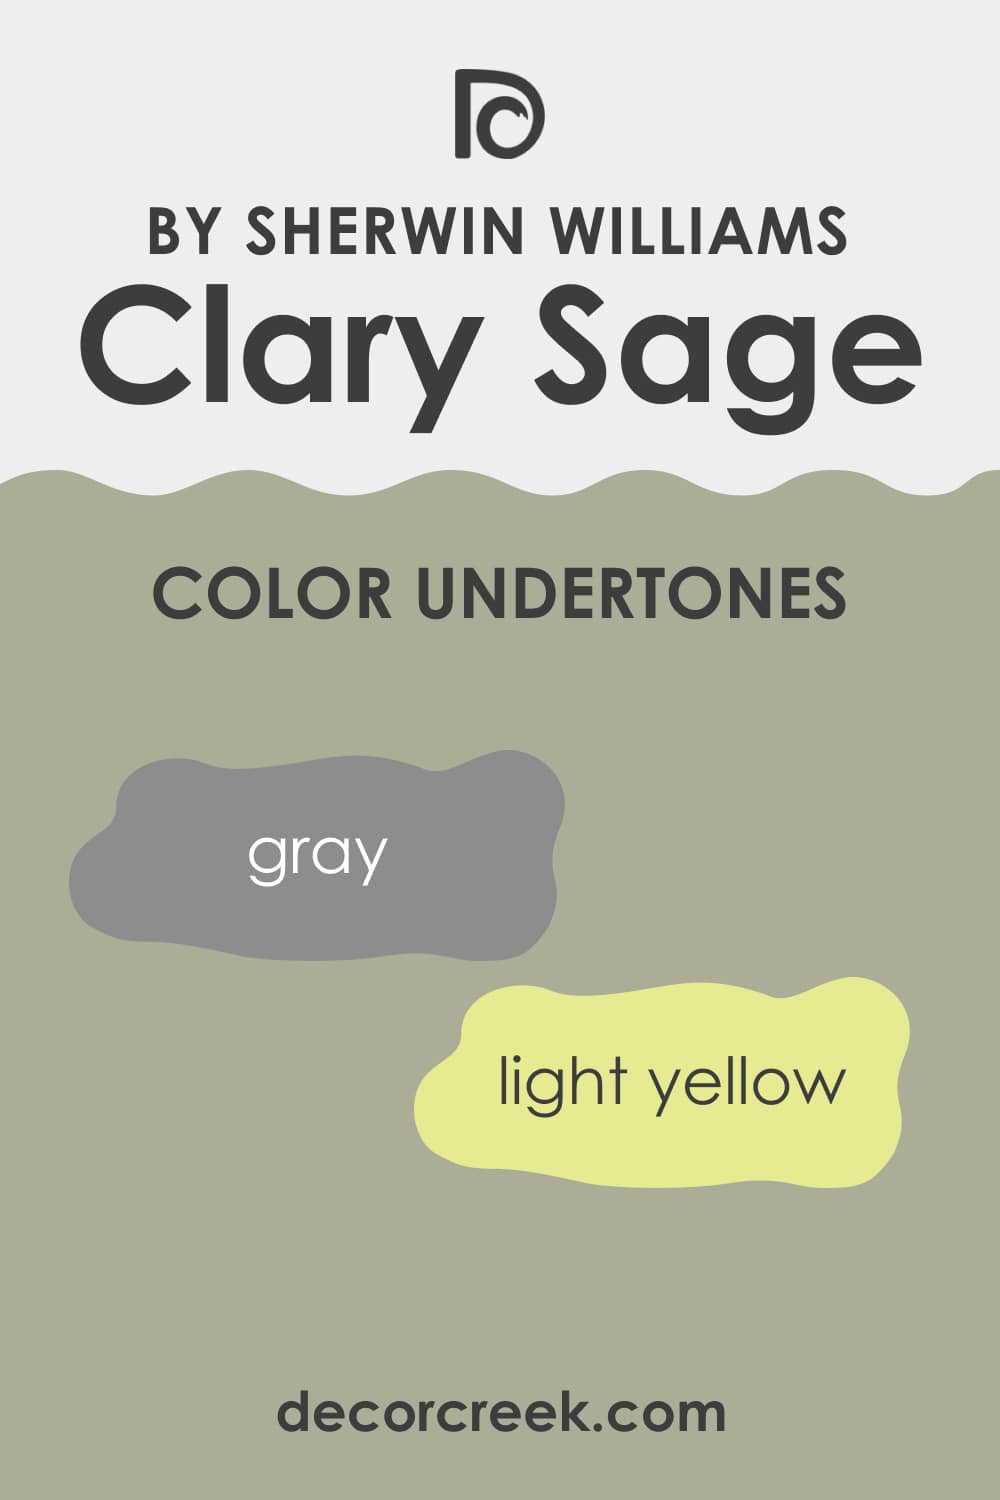 What Undertones Does Clary Sage SW-6178 Paint Color Have?